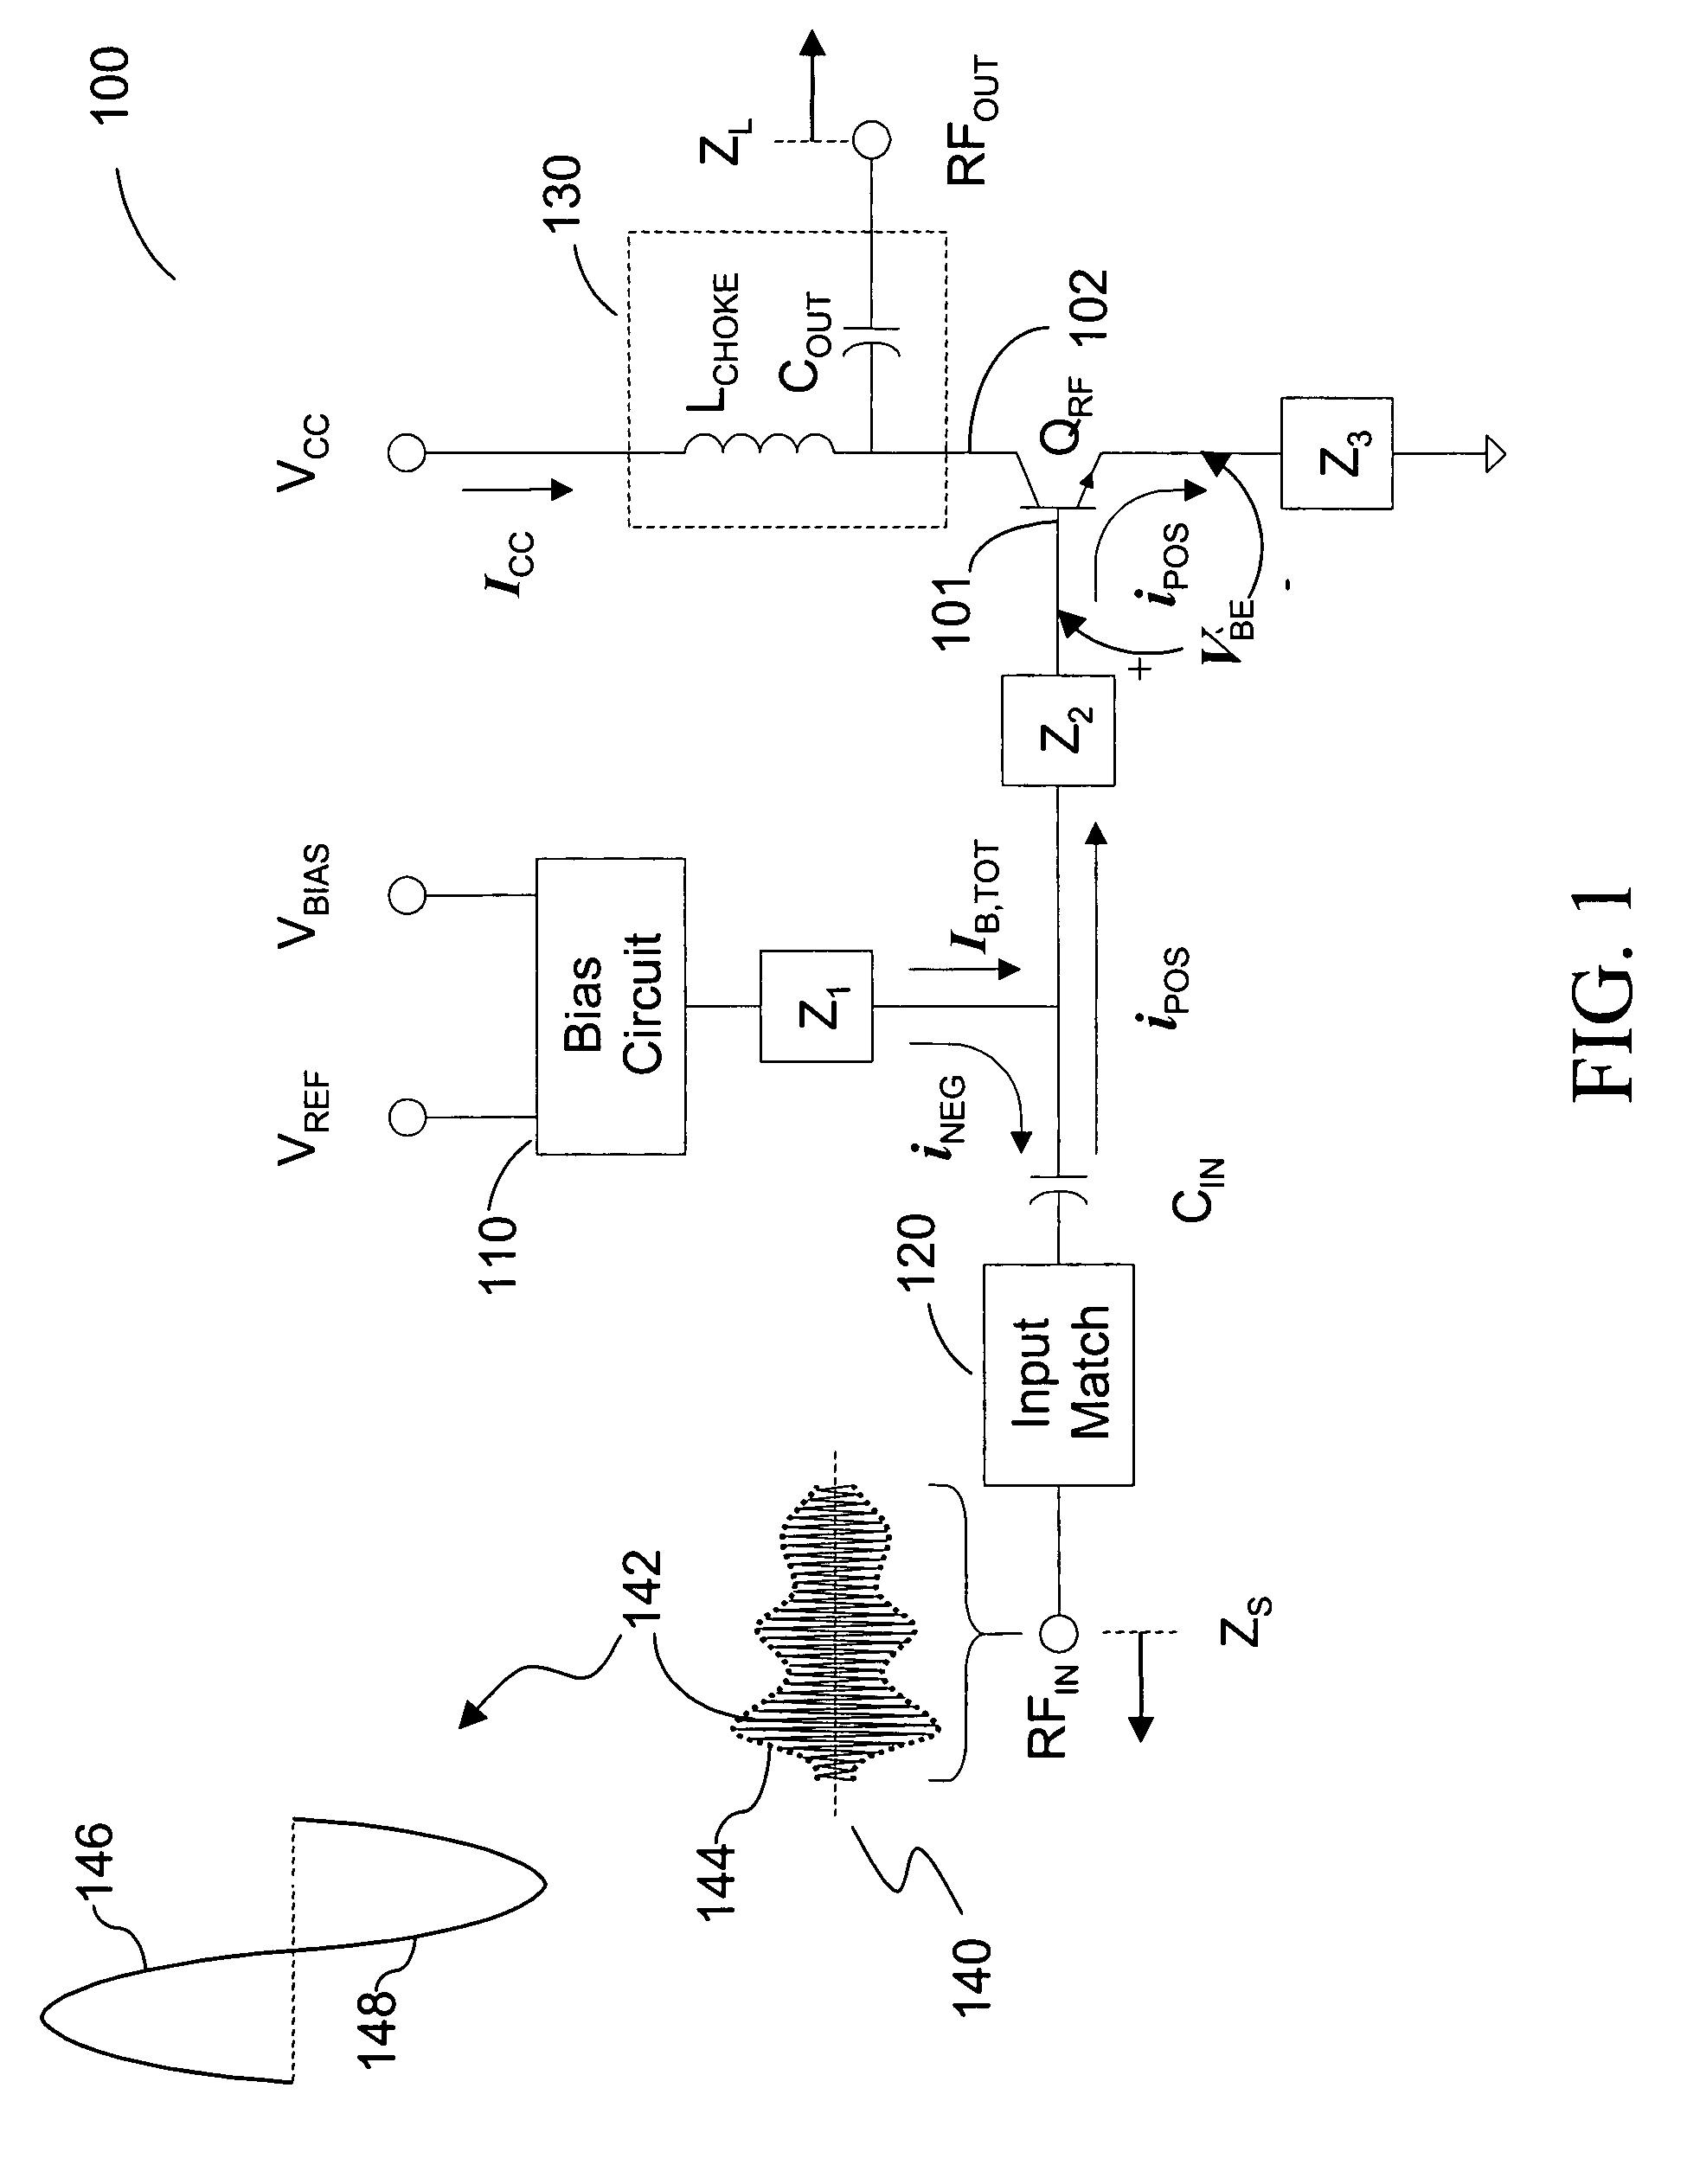 Bias circuit for BJT amplifier